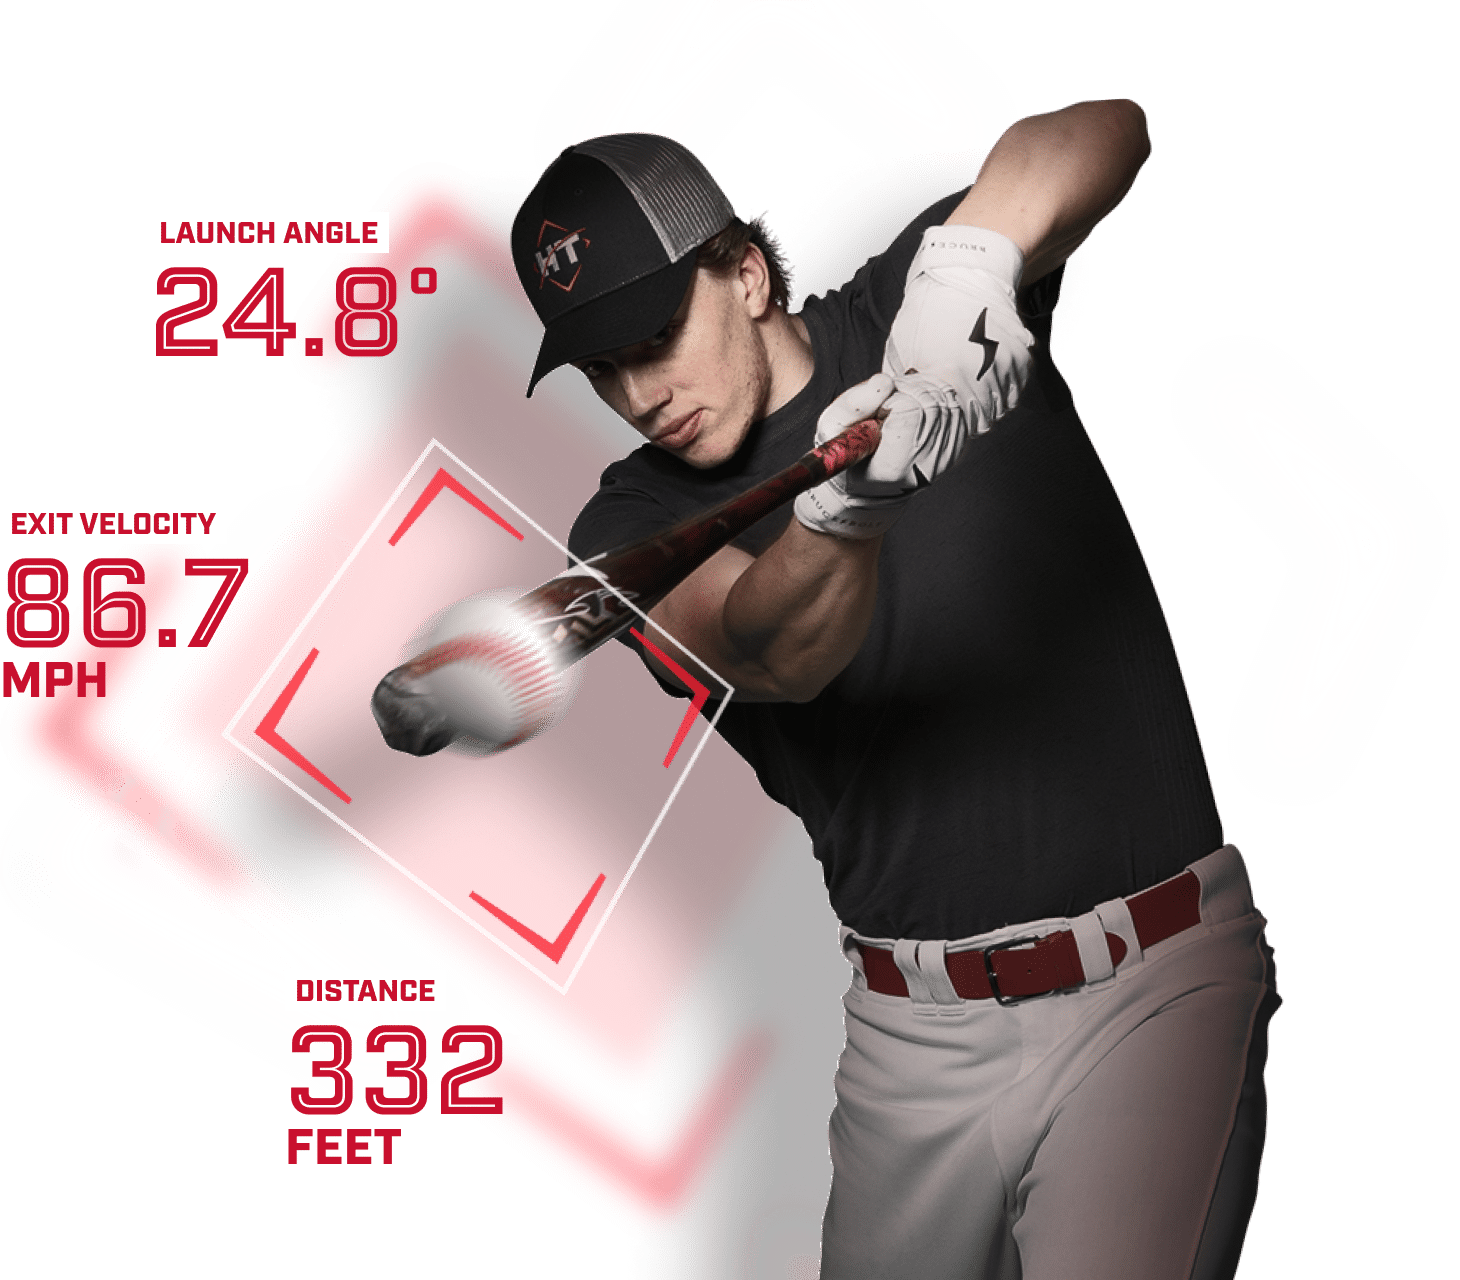 Hittrax baseball batter with detailed metrics